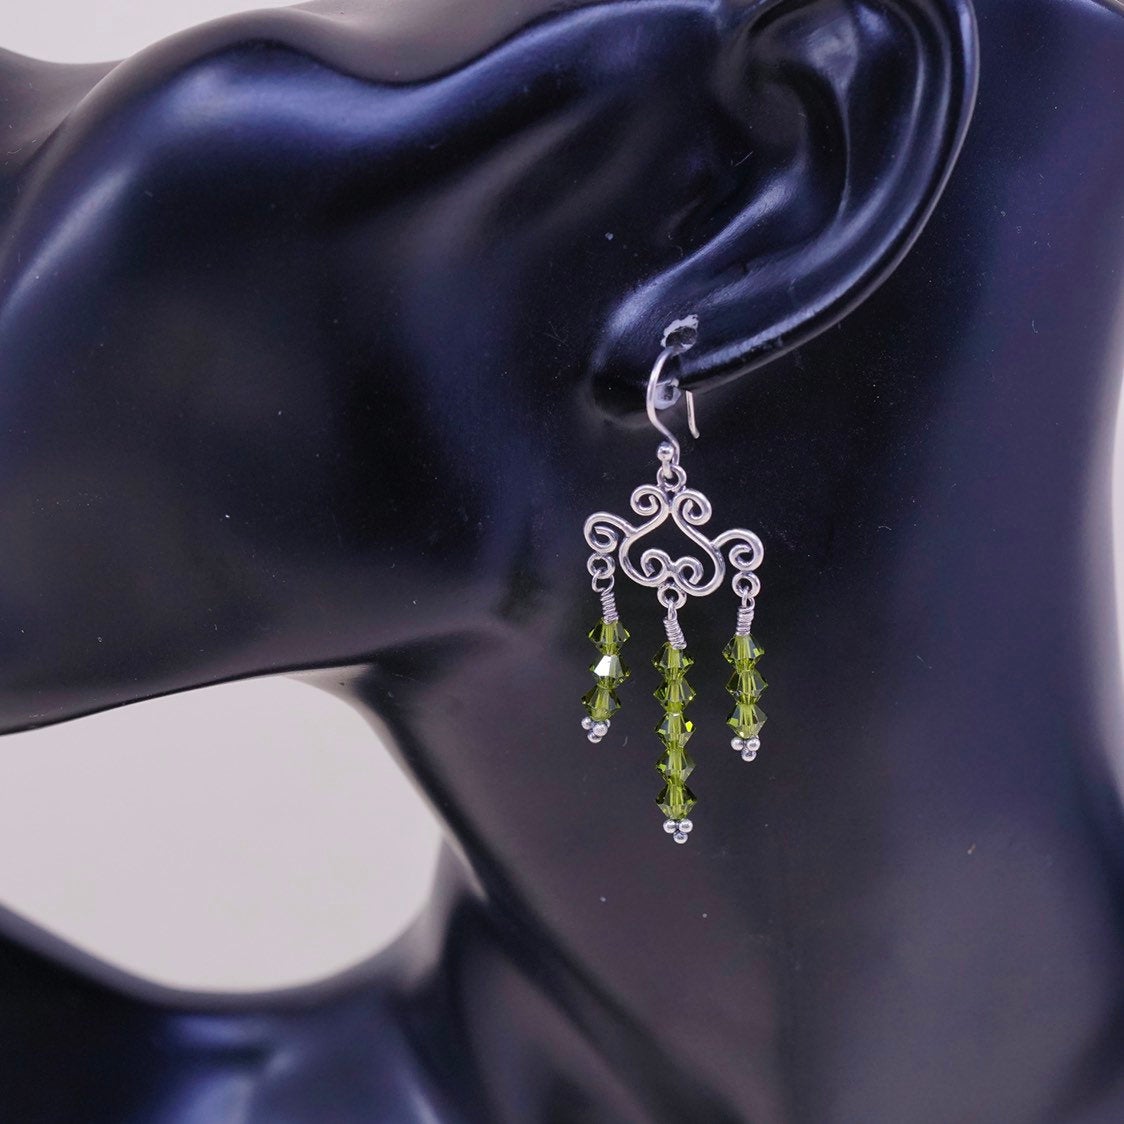 sterling silver handmade earrings 925 w/ green cluster Swarovski crystal fringe